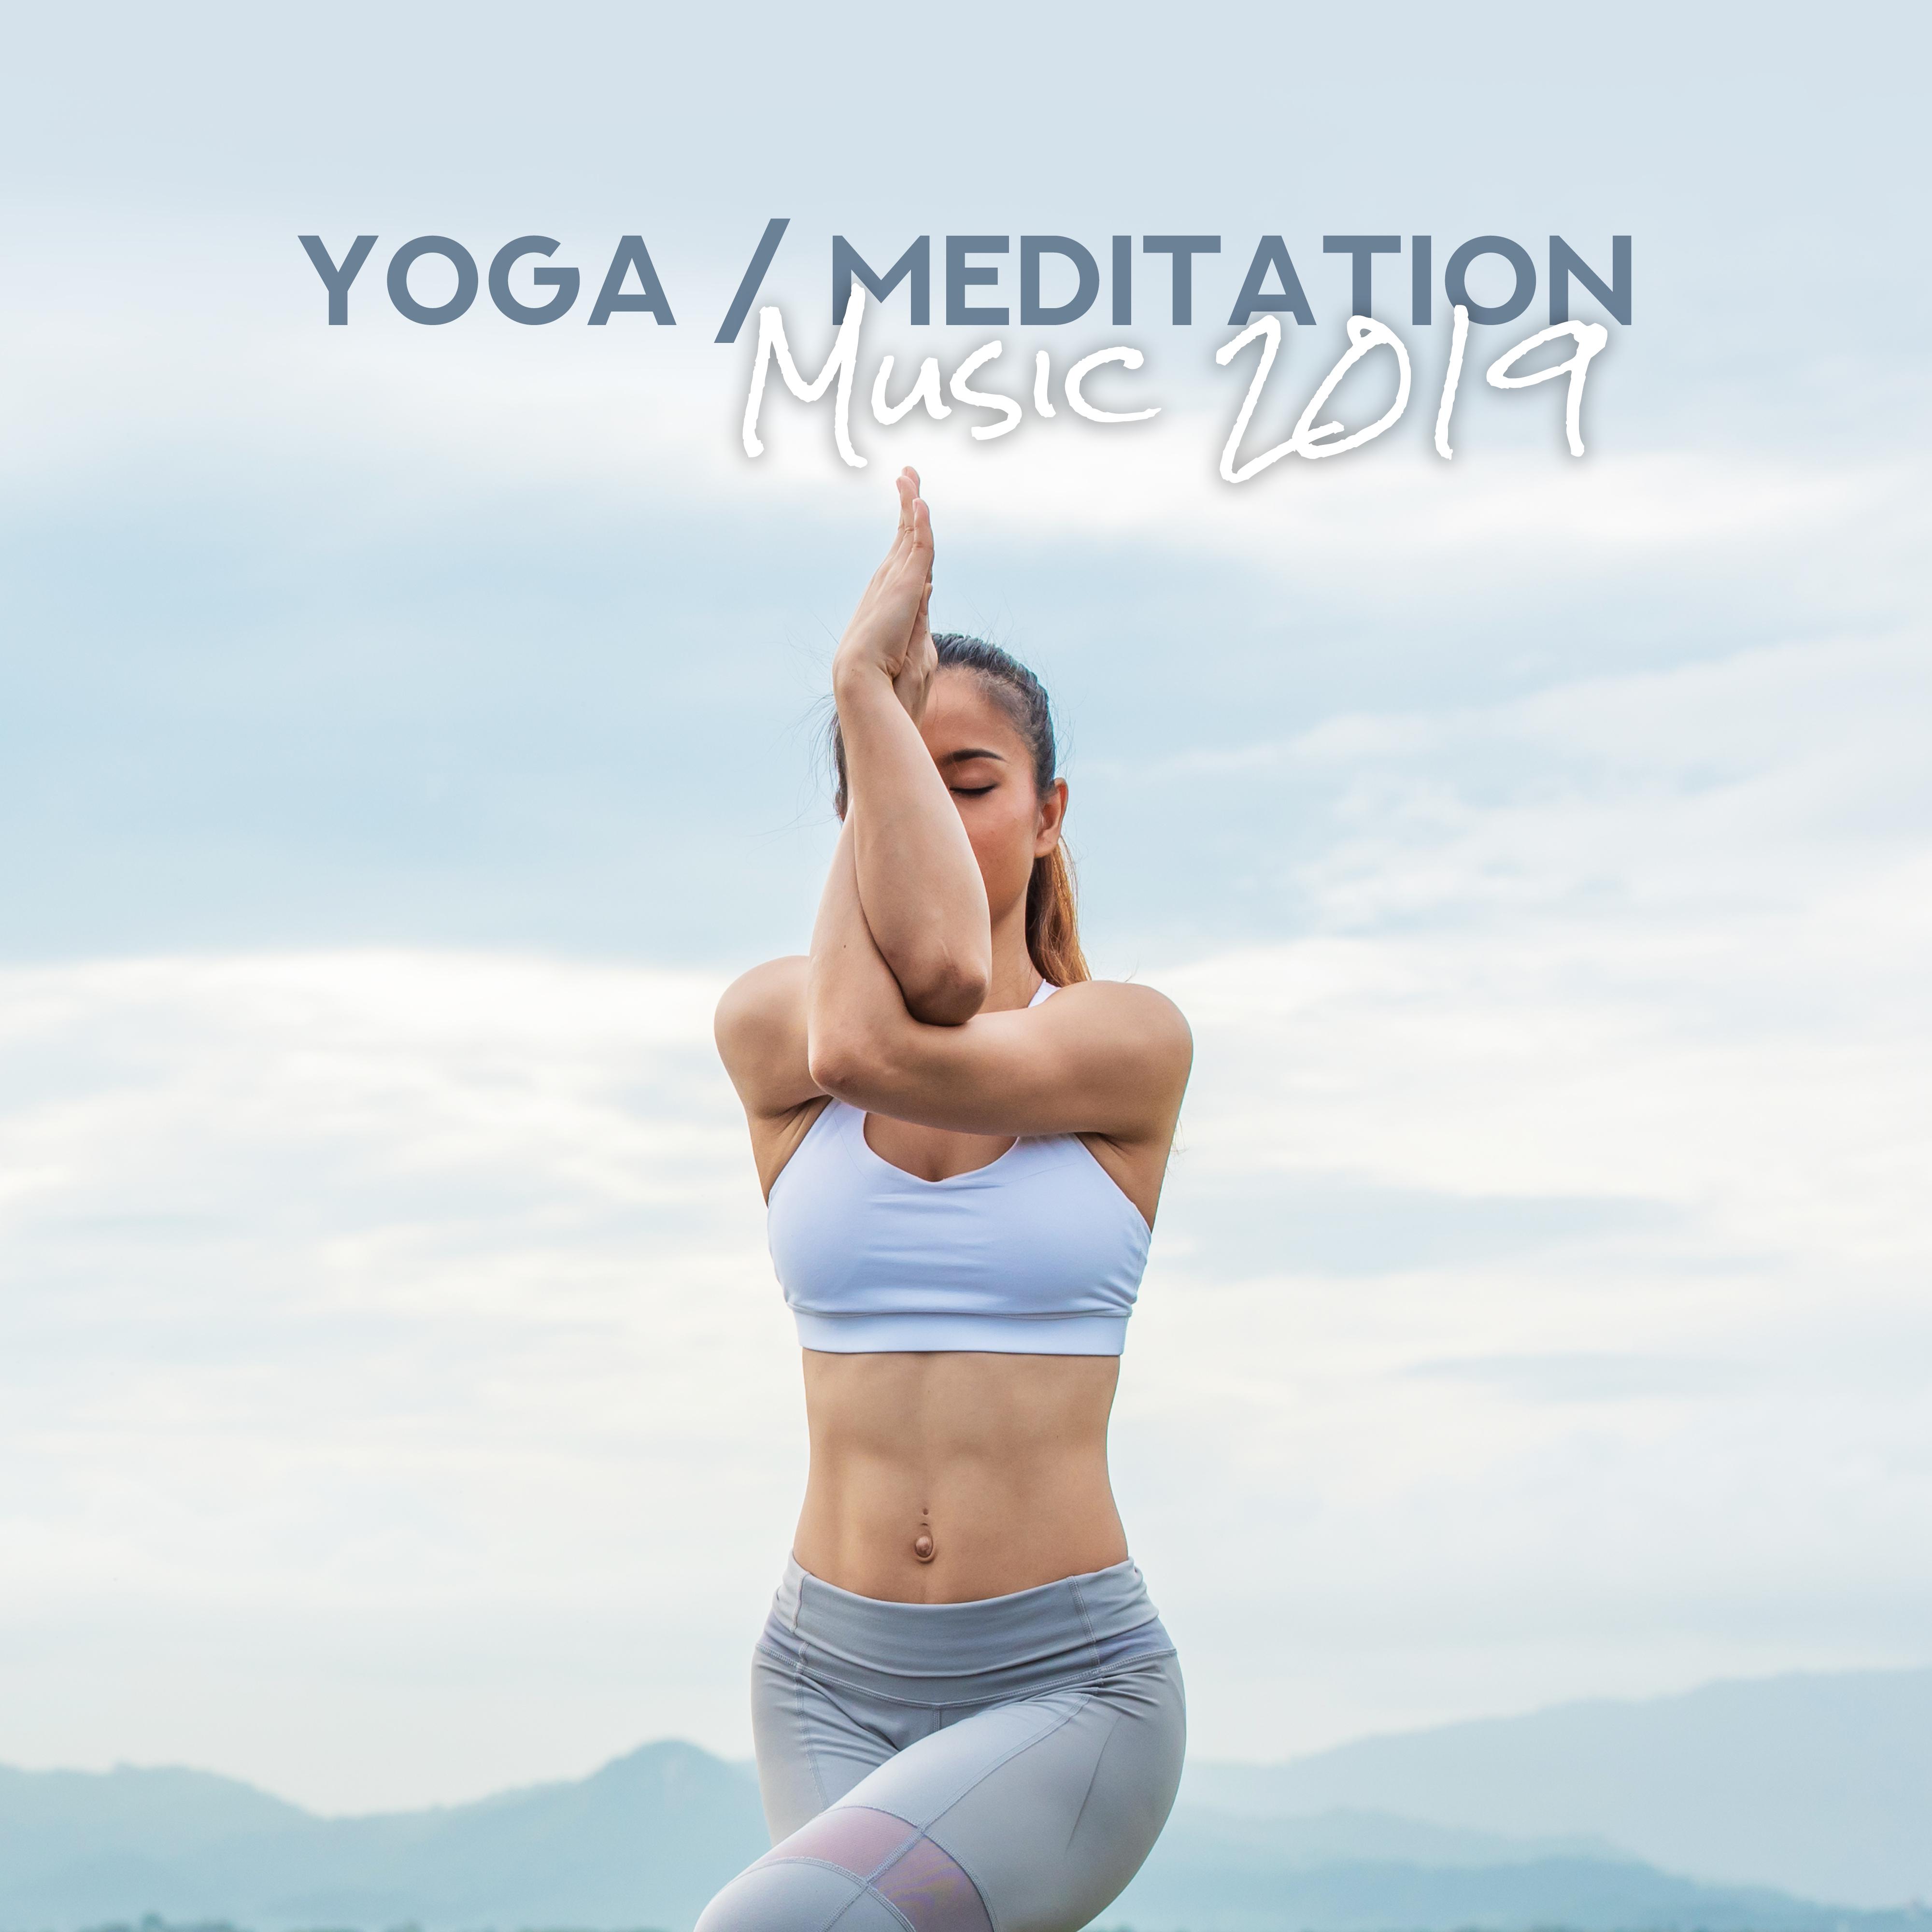 Yoga / Meditation Music 2019